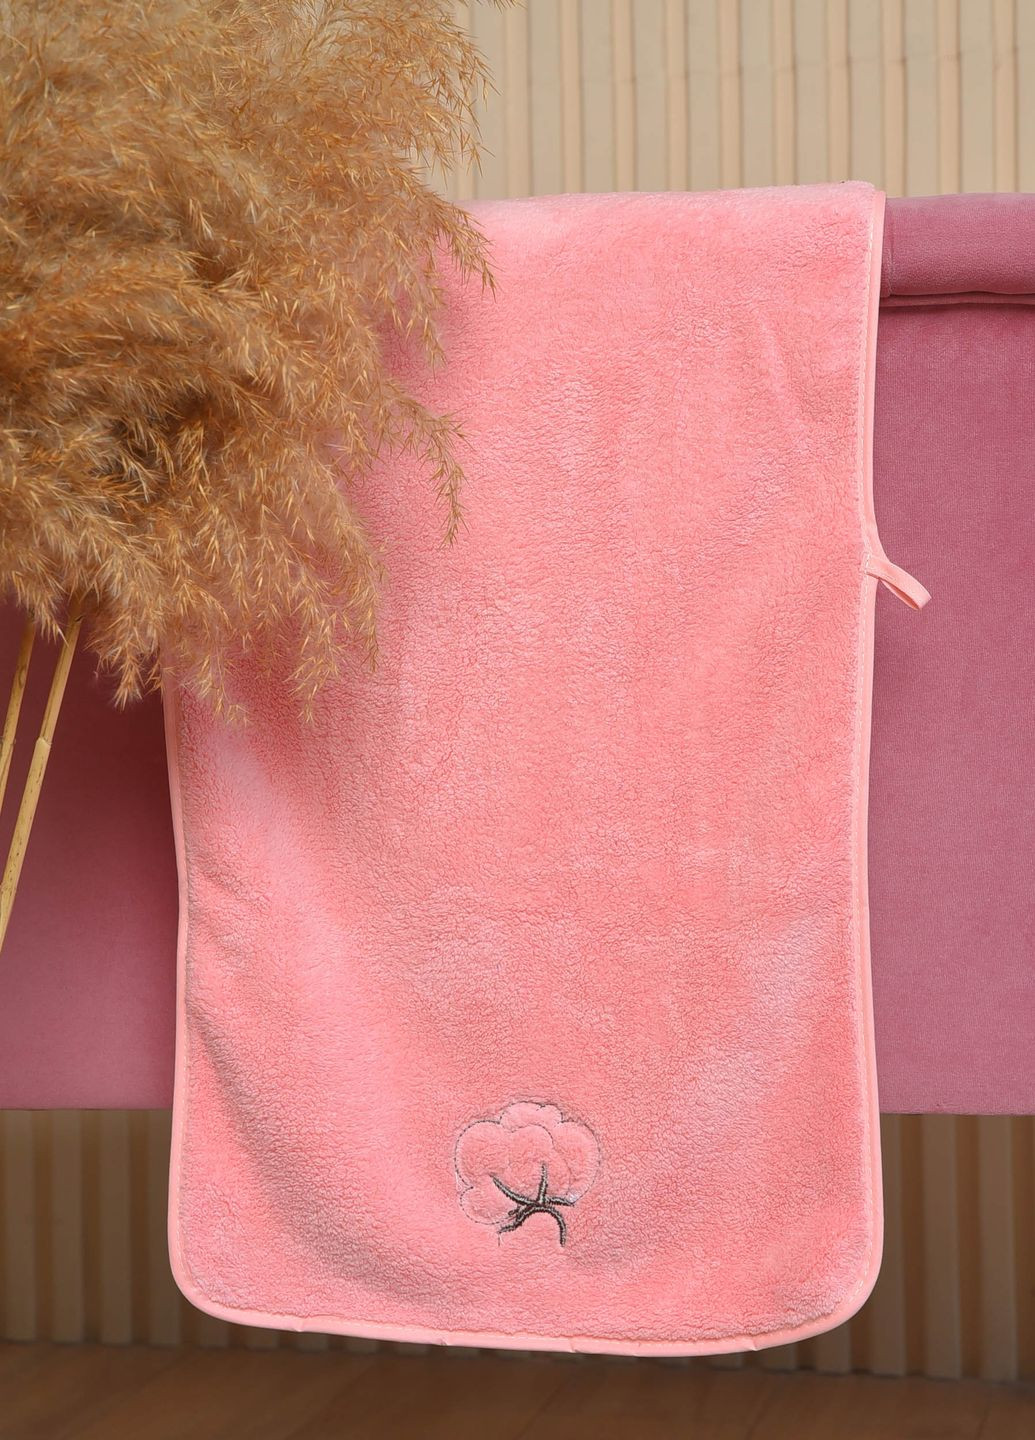 Let's Shop полотенце кухонное микрофибра розового цвета однотонный розовый производство - Китай